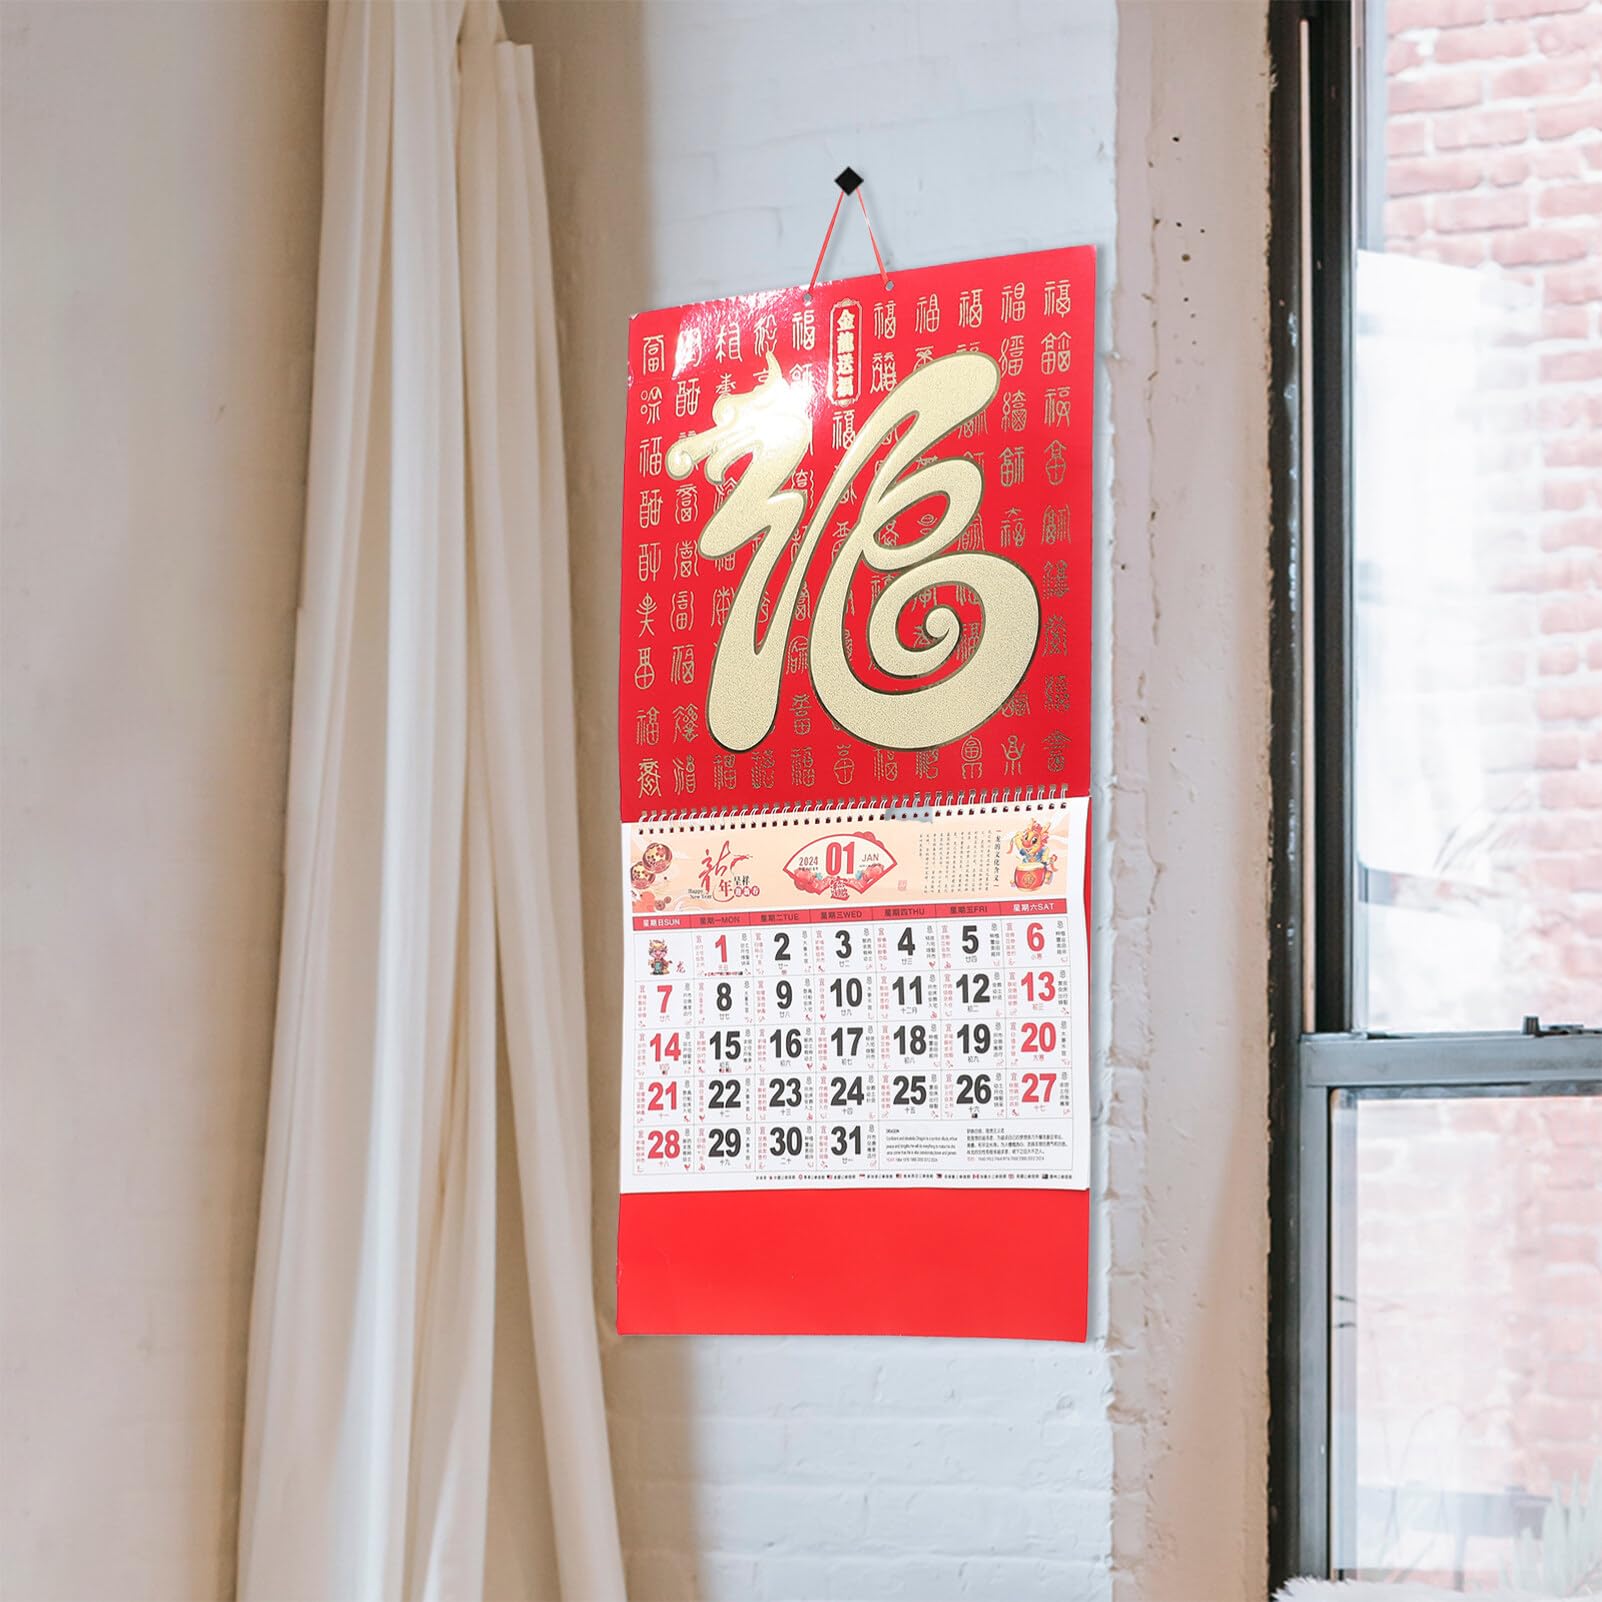 MAGICLULU Paper Calendar 2024 Wall Calendar Vintage Year of Dragon Hanging Calendar Traditional Chinese Lunar Calendar Monthly Schedule Agenda Planner for Home Office Calendar Washi Tape